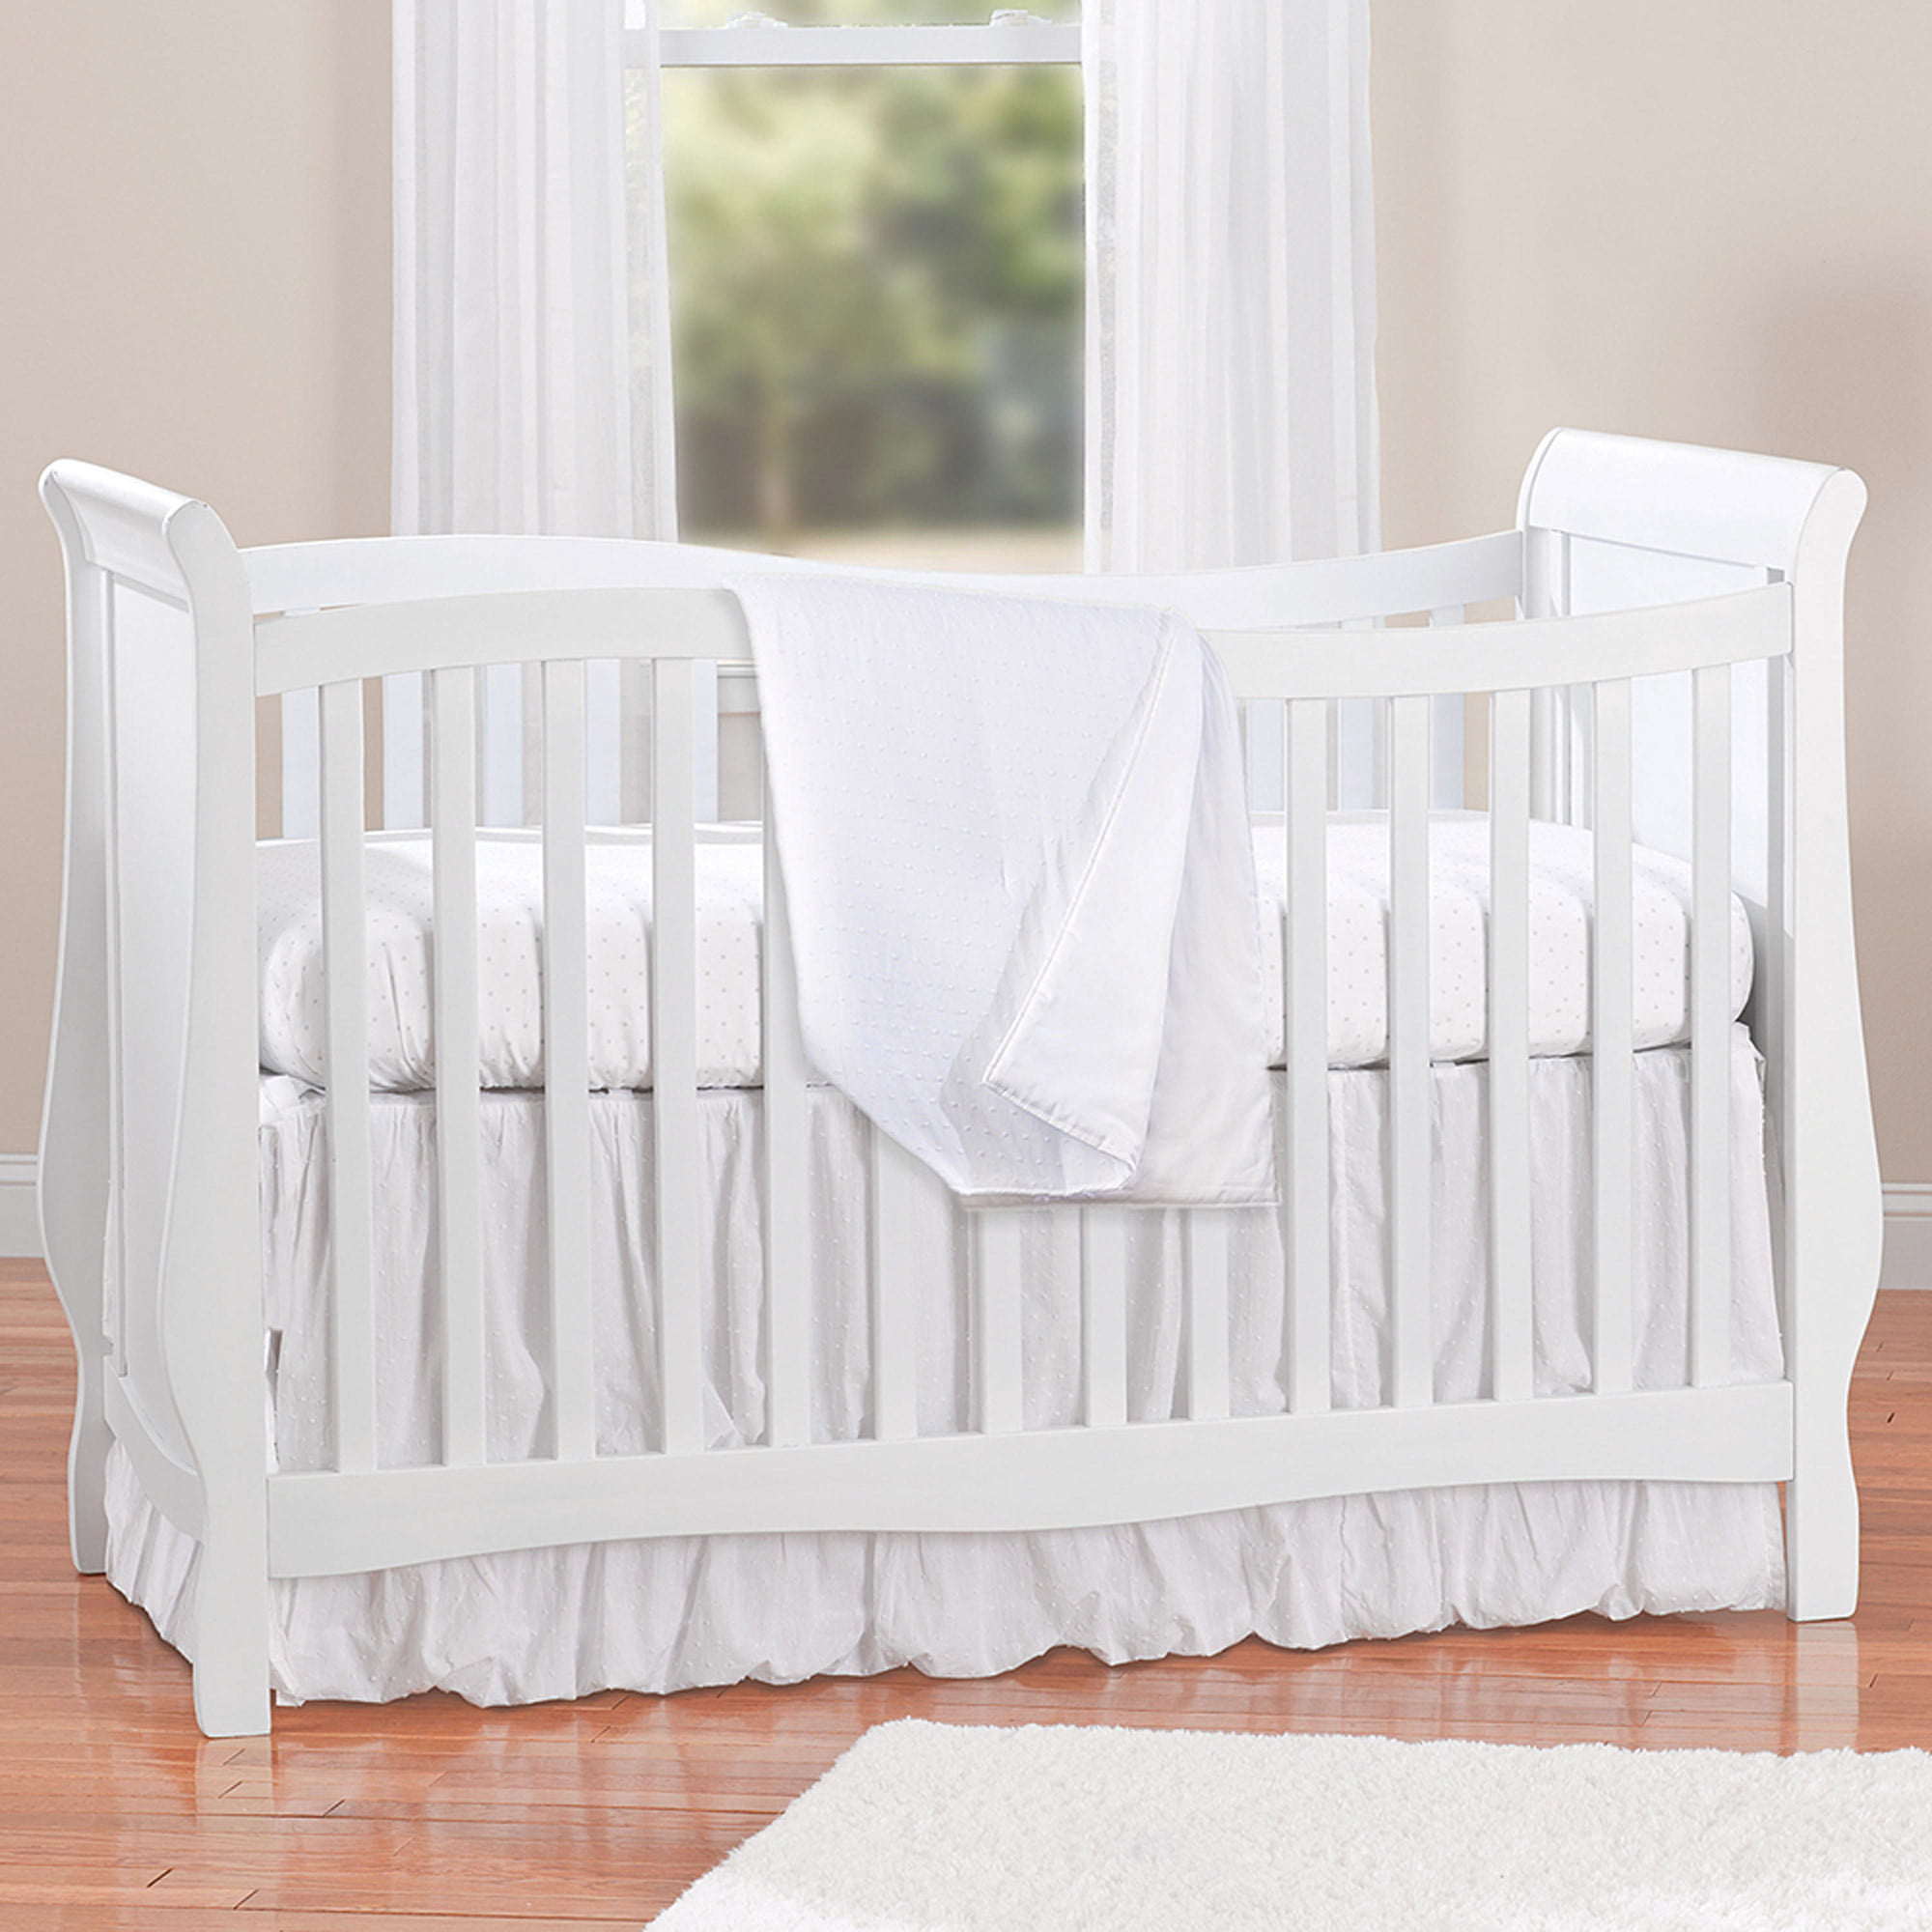 white crib sheet set